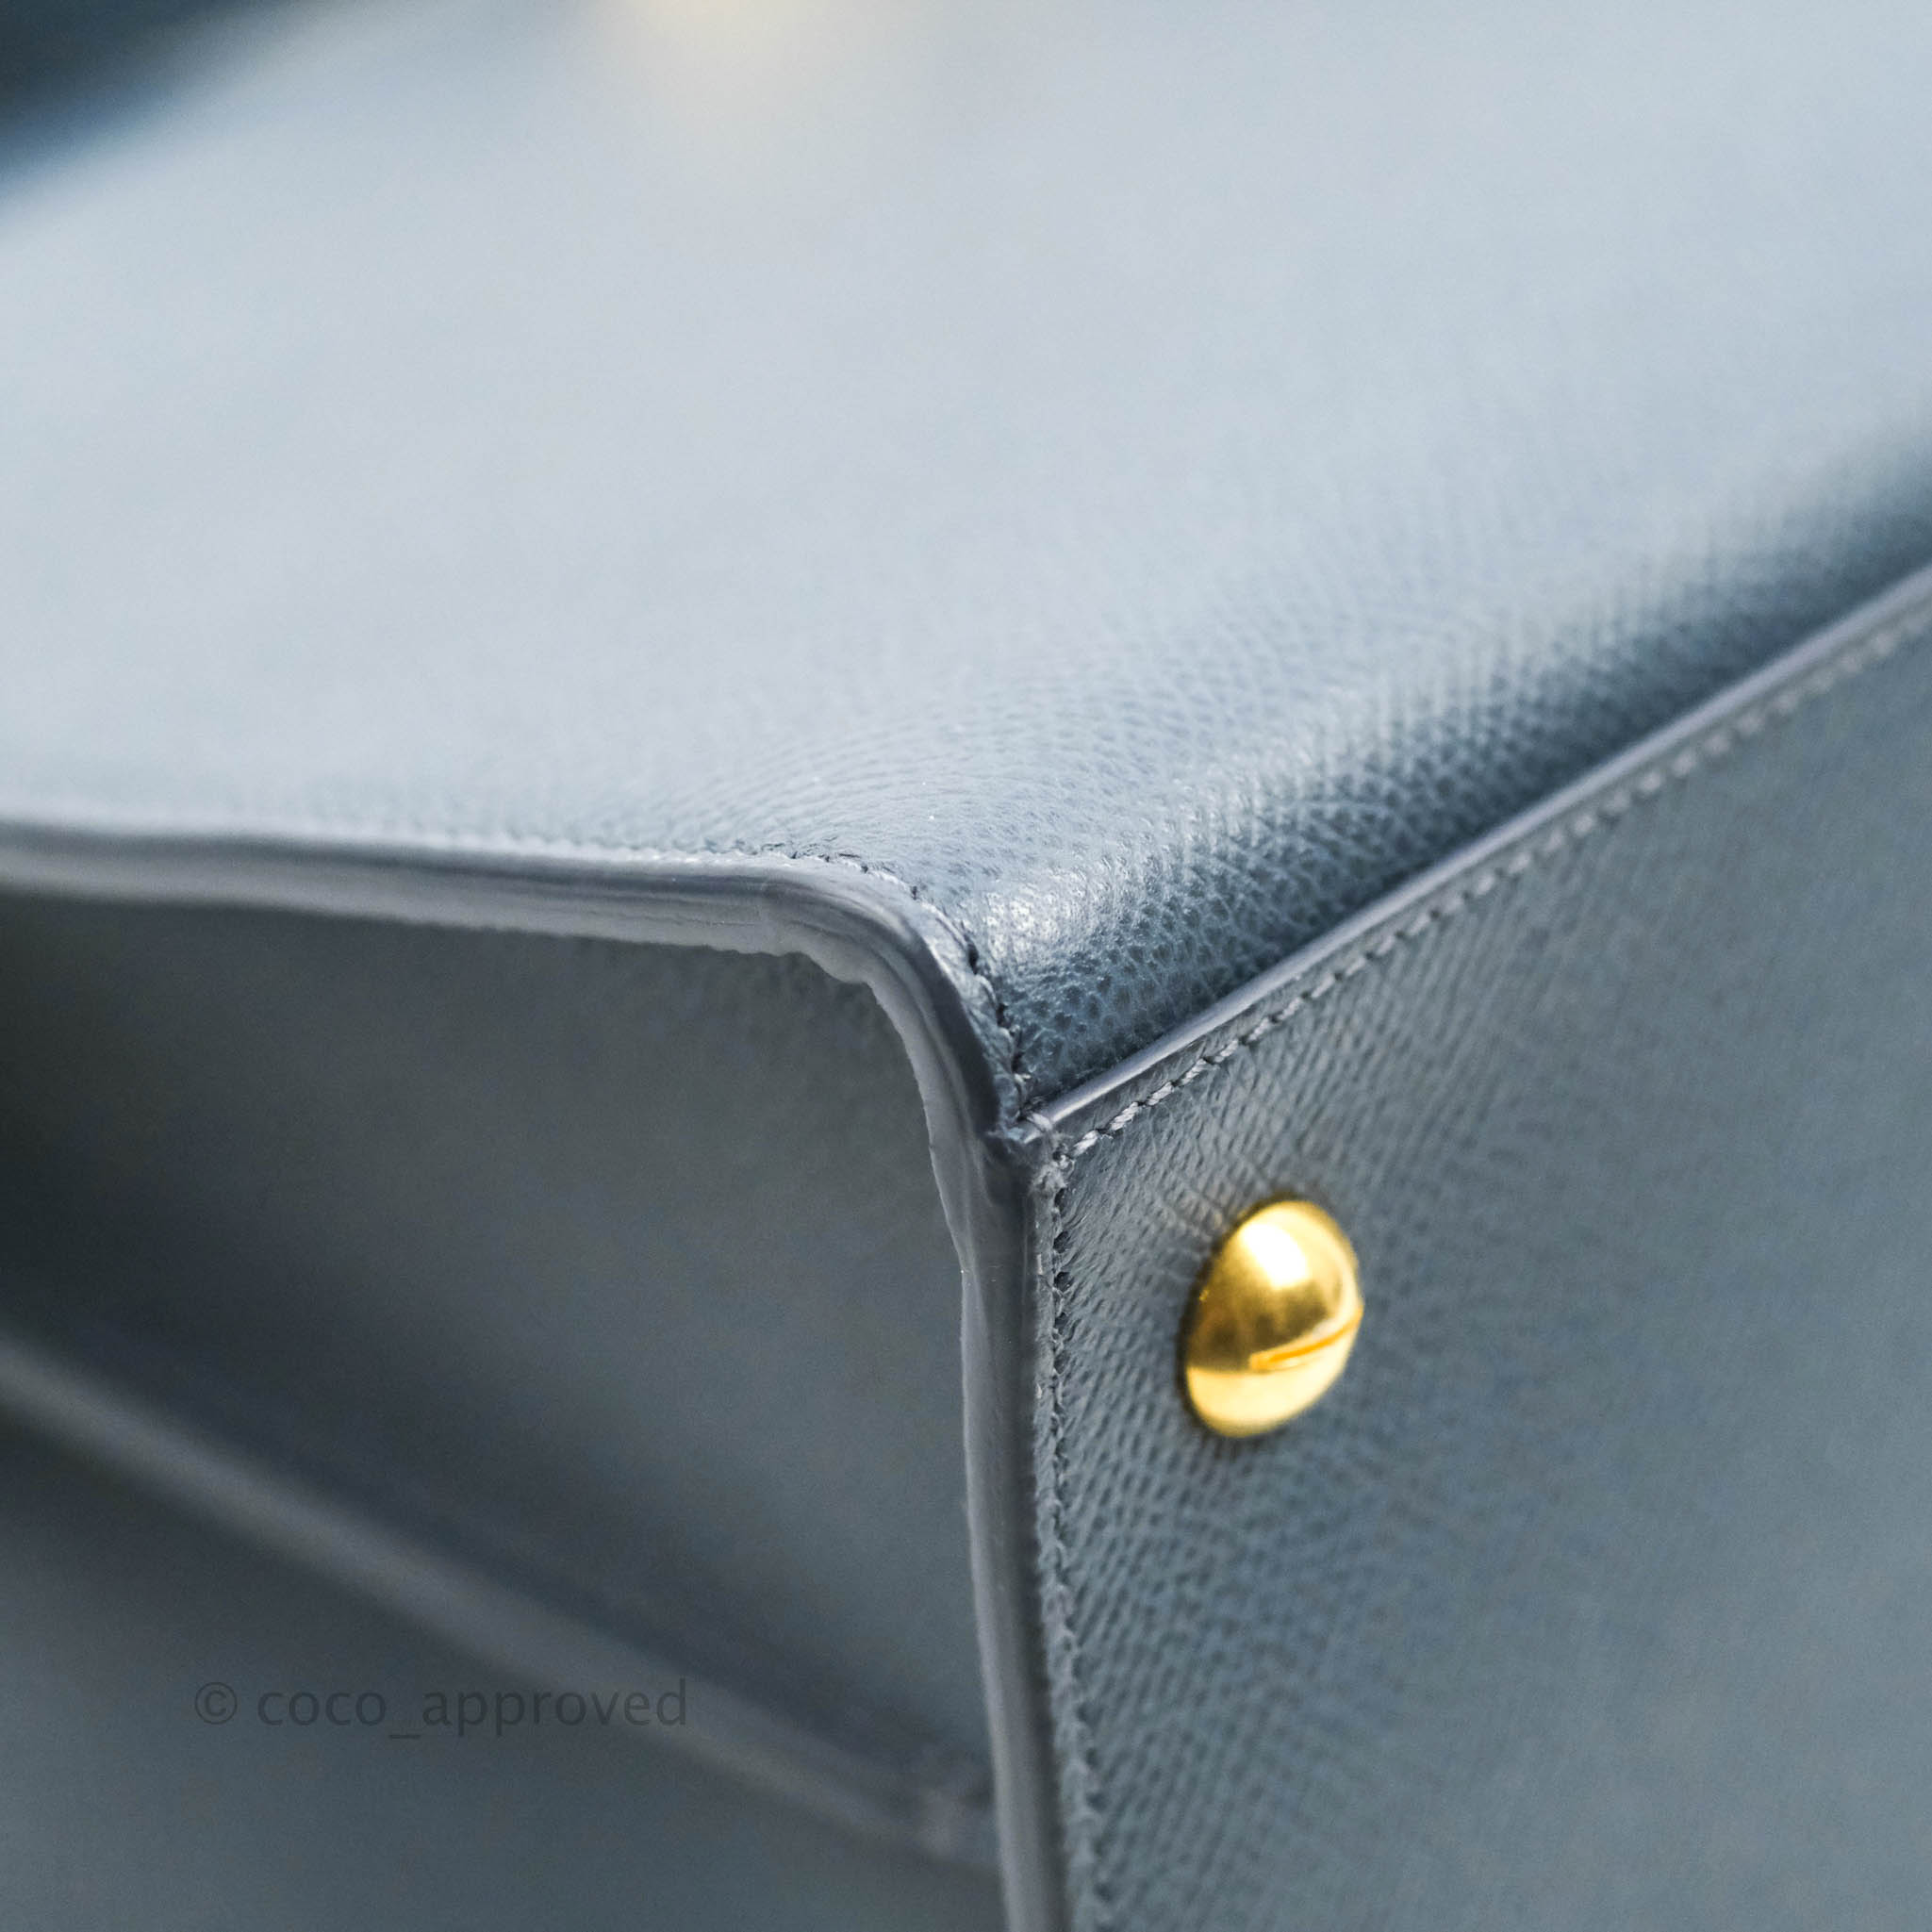 Christian Dior Silver Pebbled Calfskin Leather Dio Evolution Flap Bag